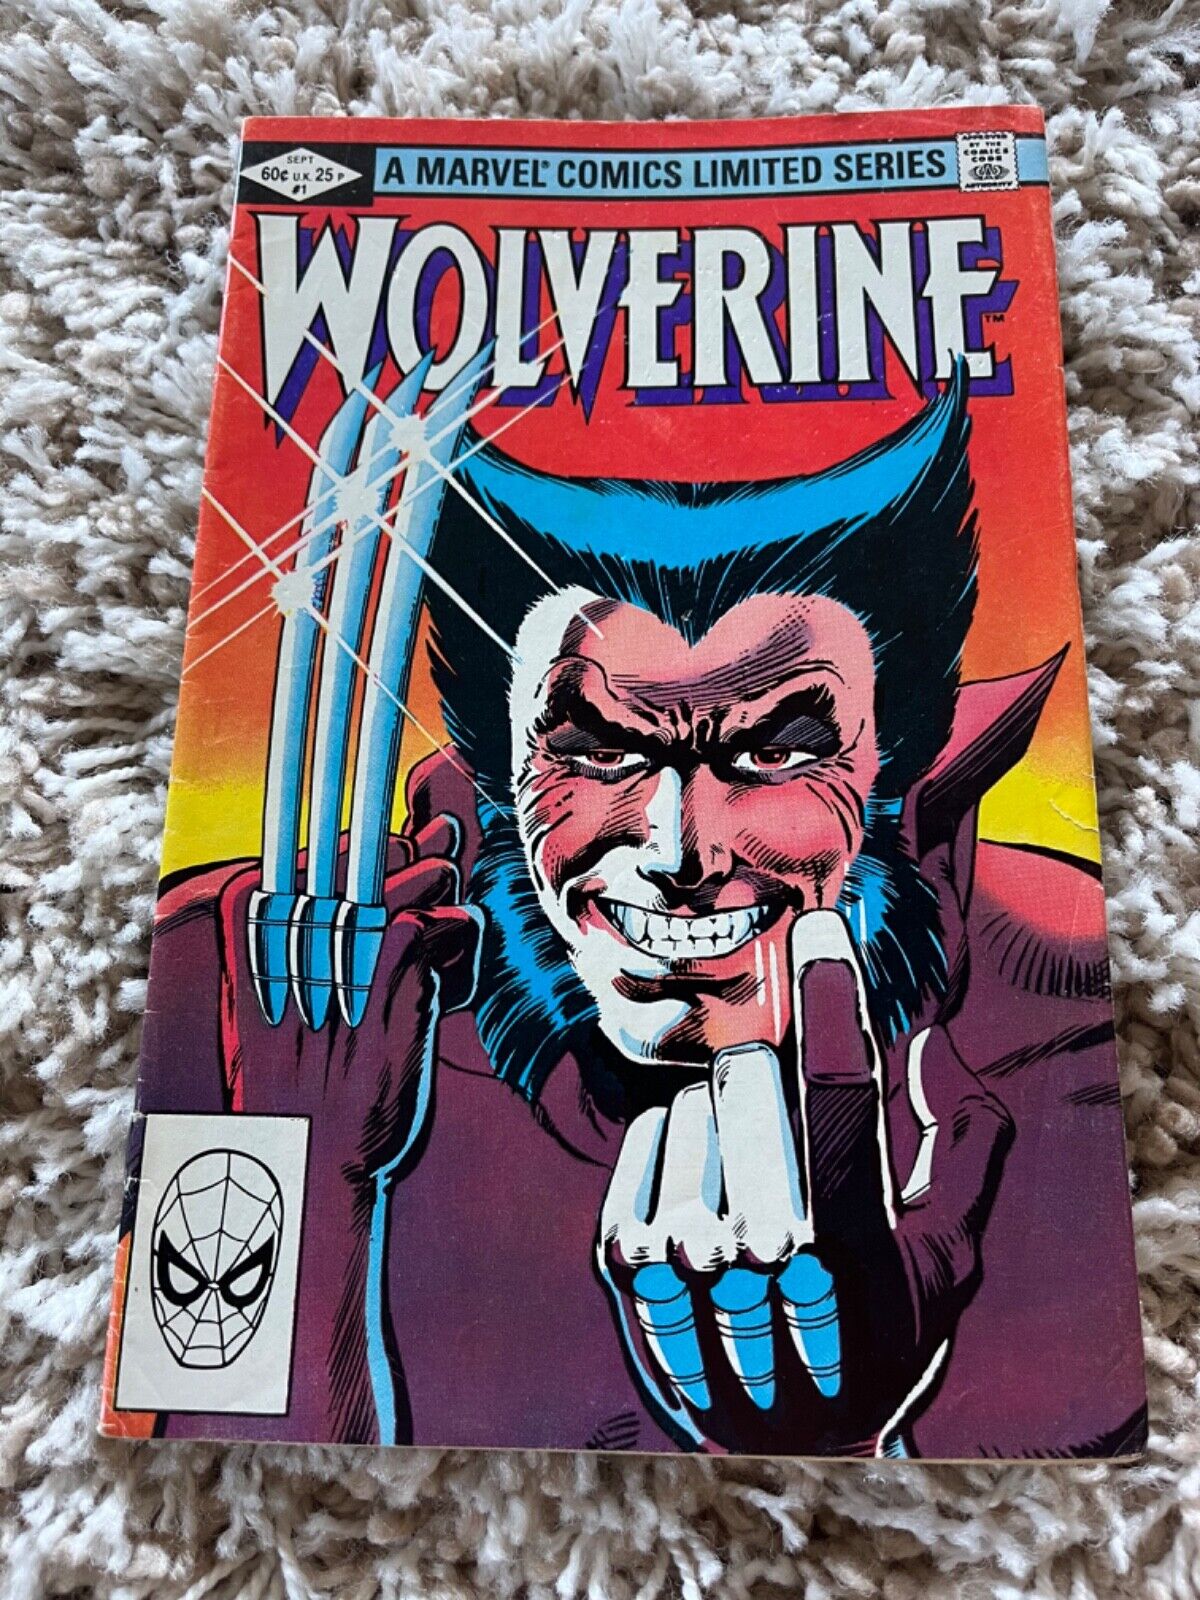 Wolverine Limited Series #1 VG+ 4.5 Marvel Comics 1982